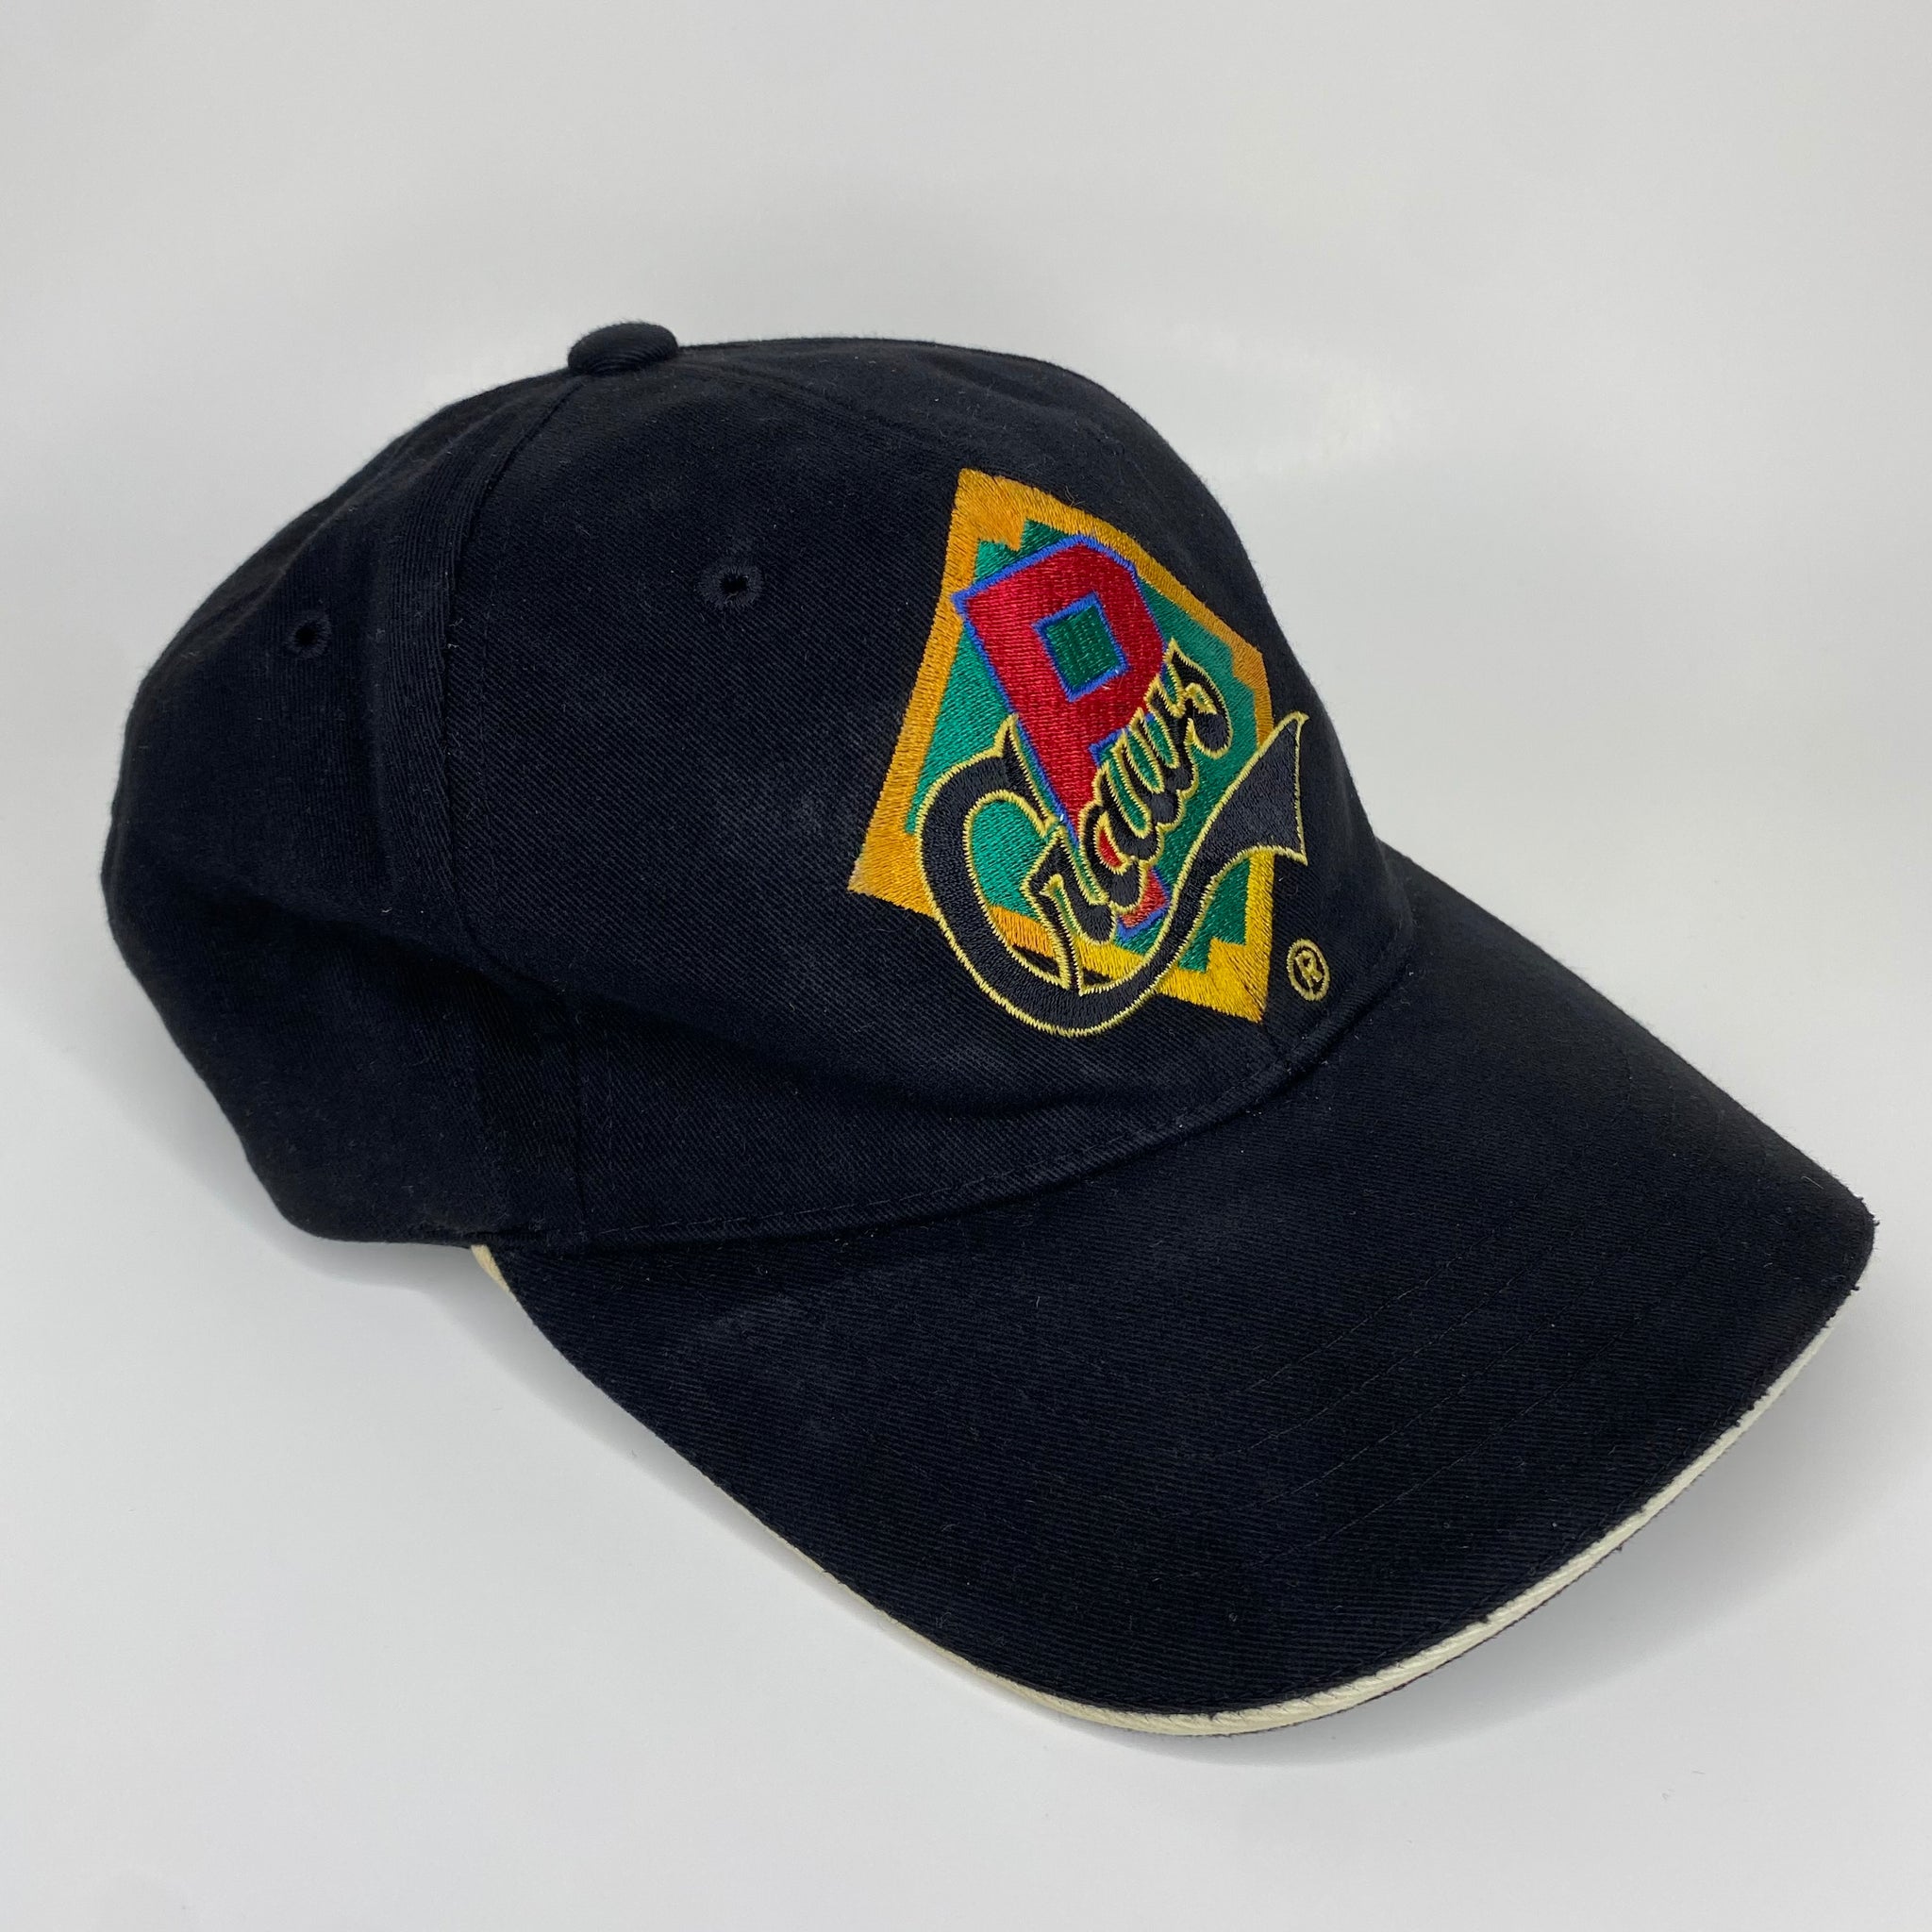 pittsburgh crawfords hat